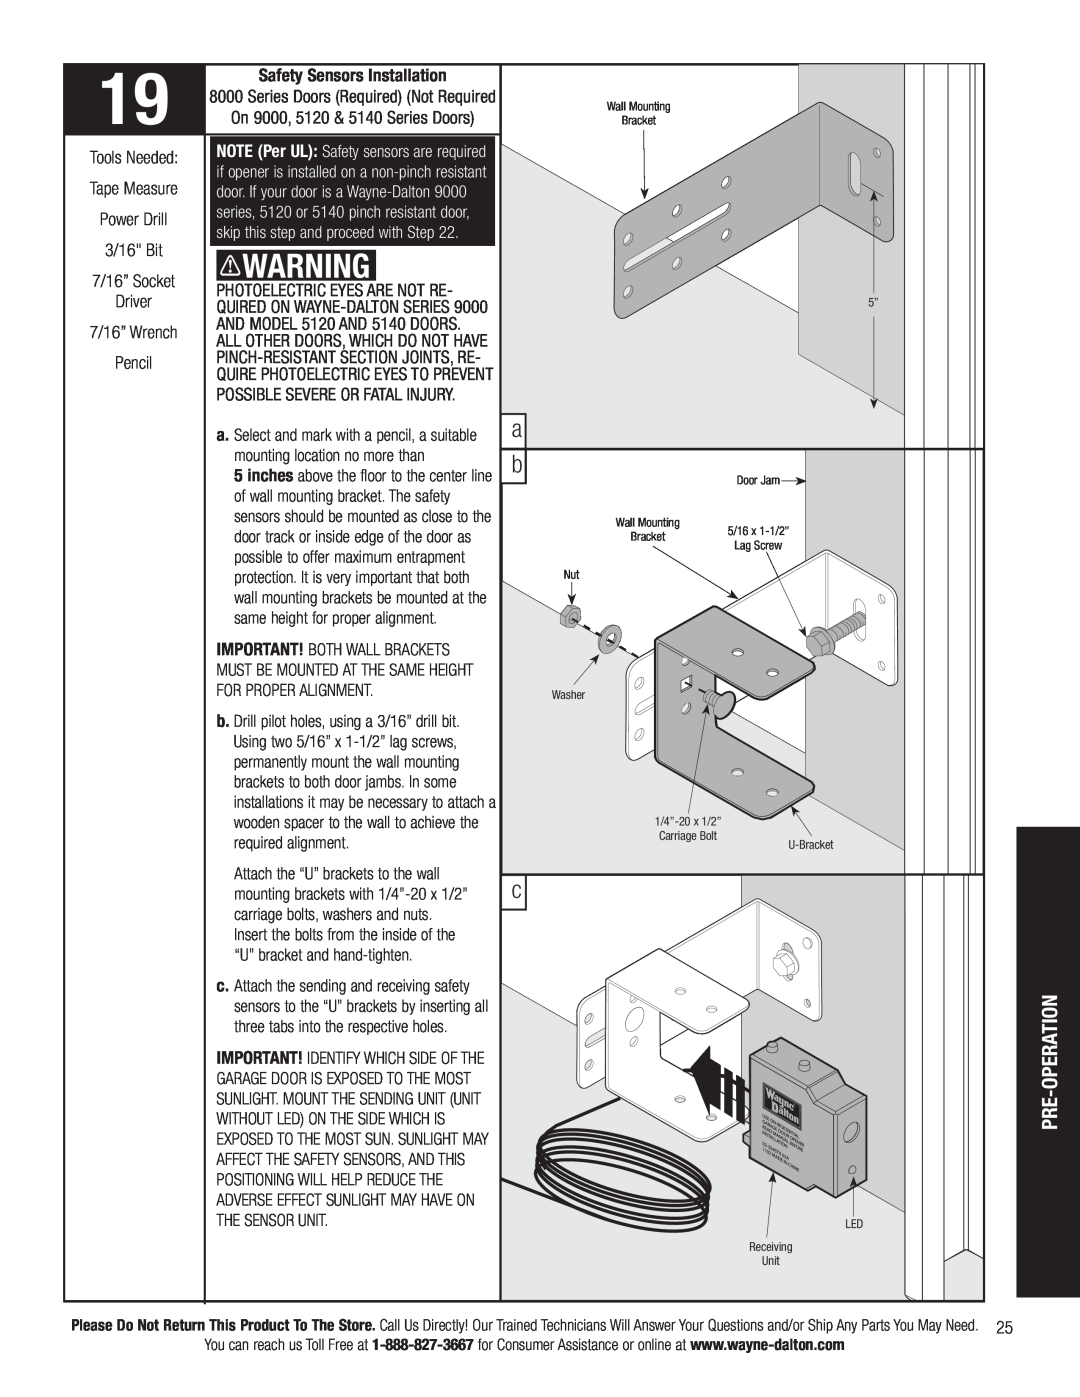 Wayne-Dalton 3790-Z installation instructions Pre-Operation, Safety Sensors Installation 